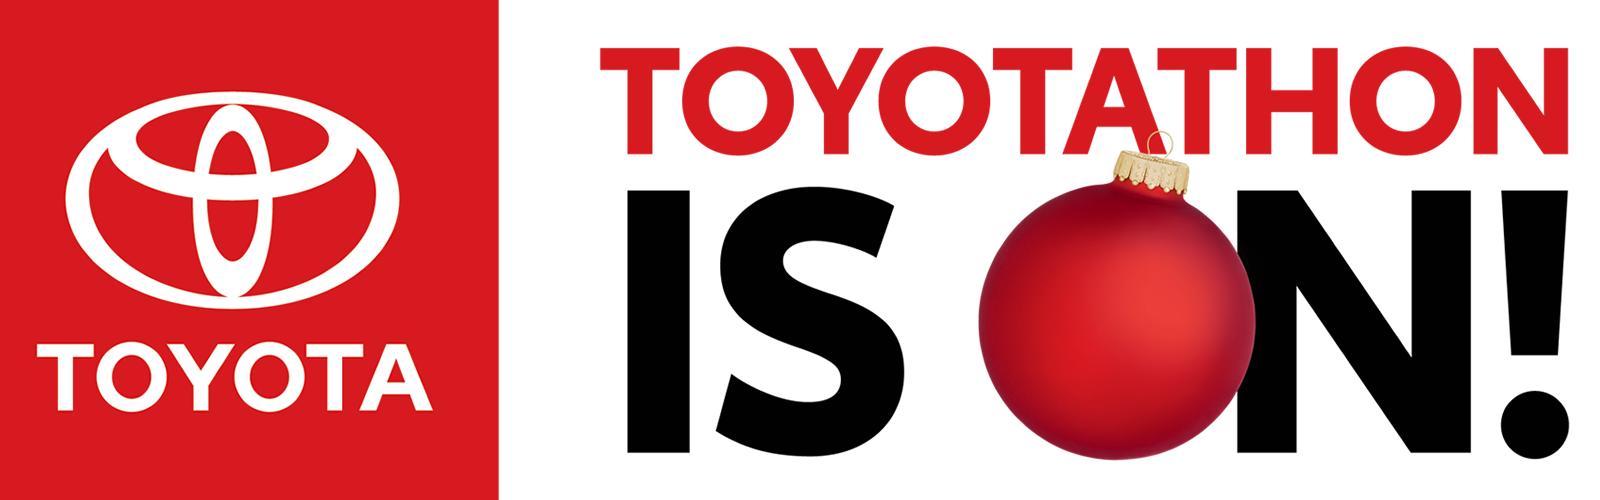 Toyotathon Sales Event Boston, MA Toyota Deals & Offers